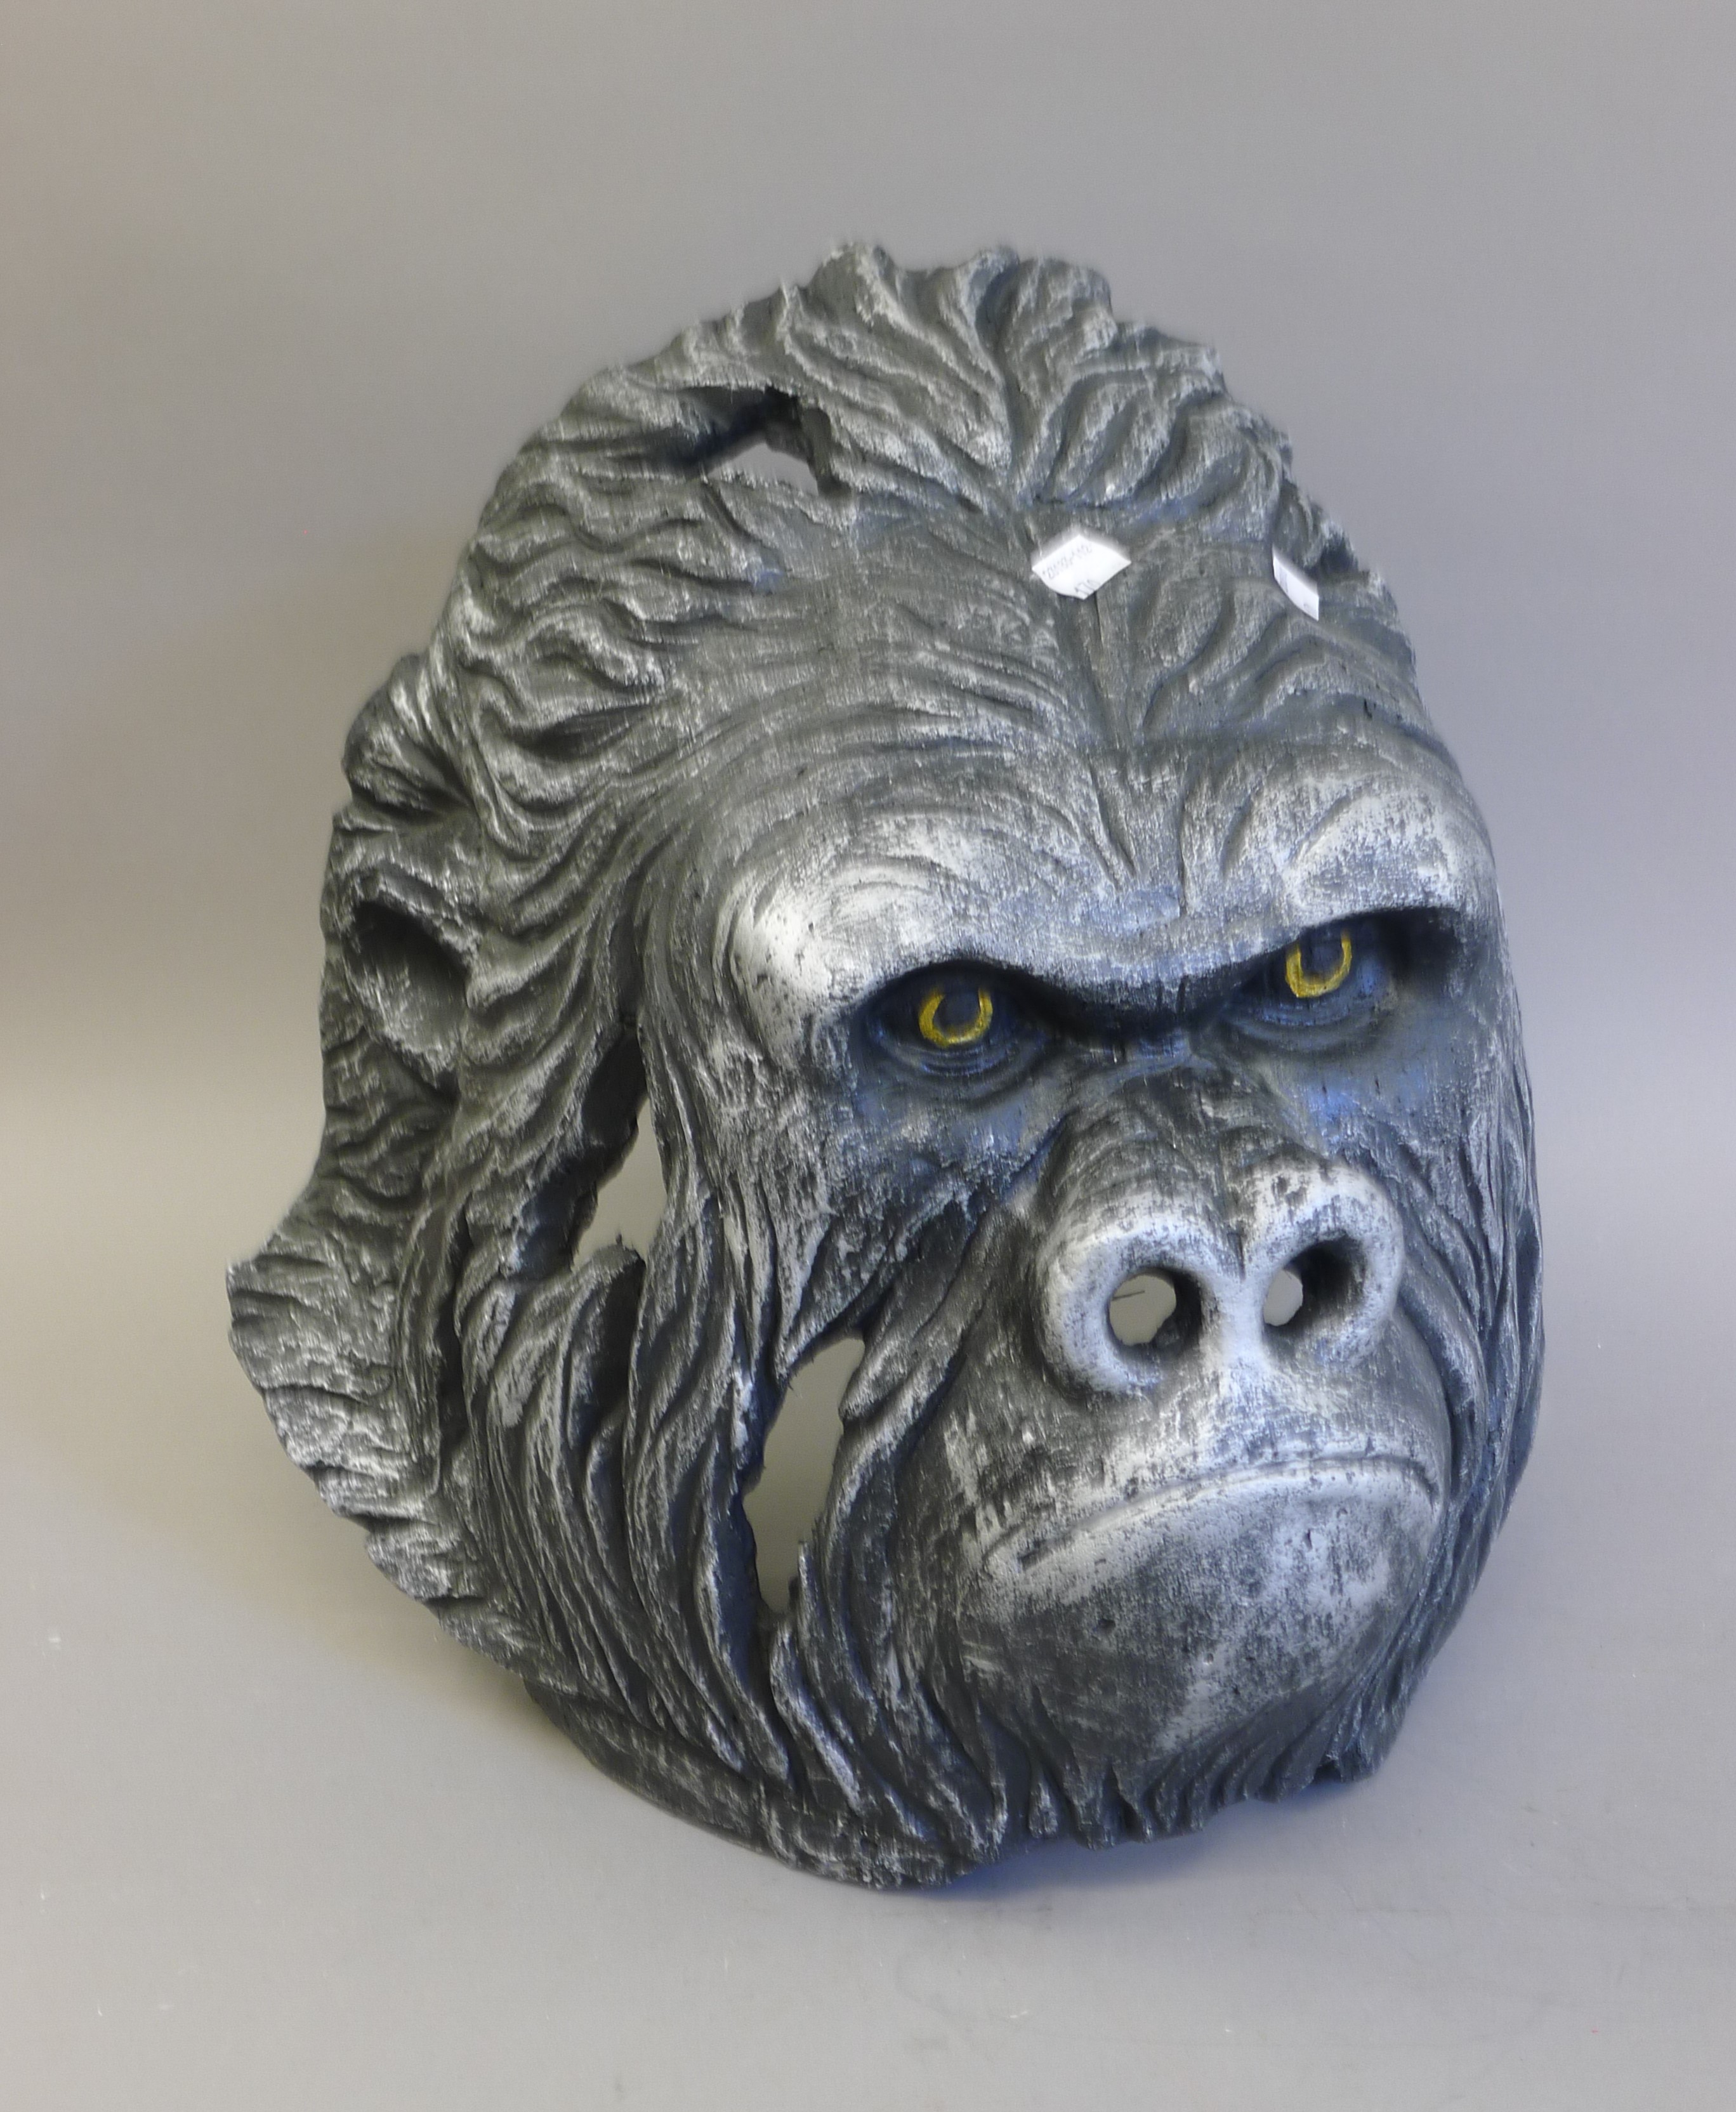 A gorilla head/mask. 38 cm high.